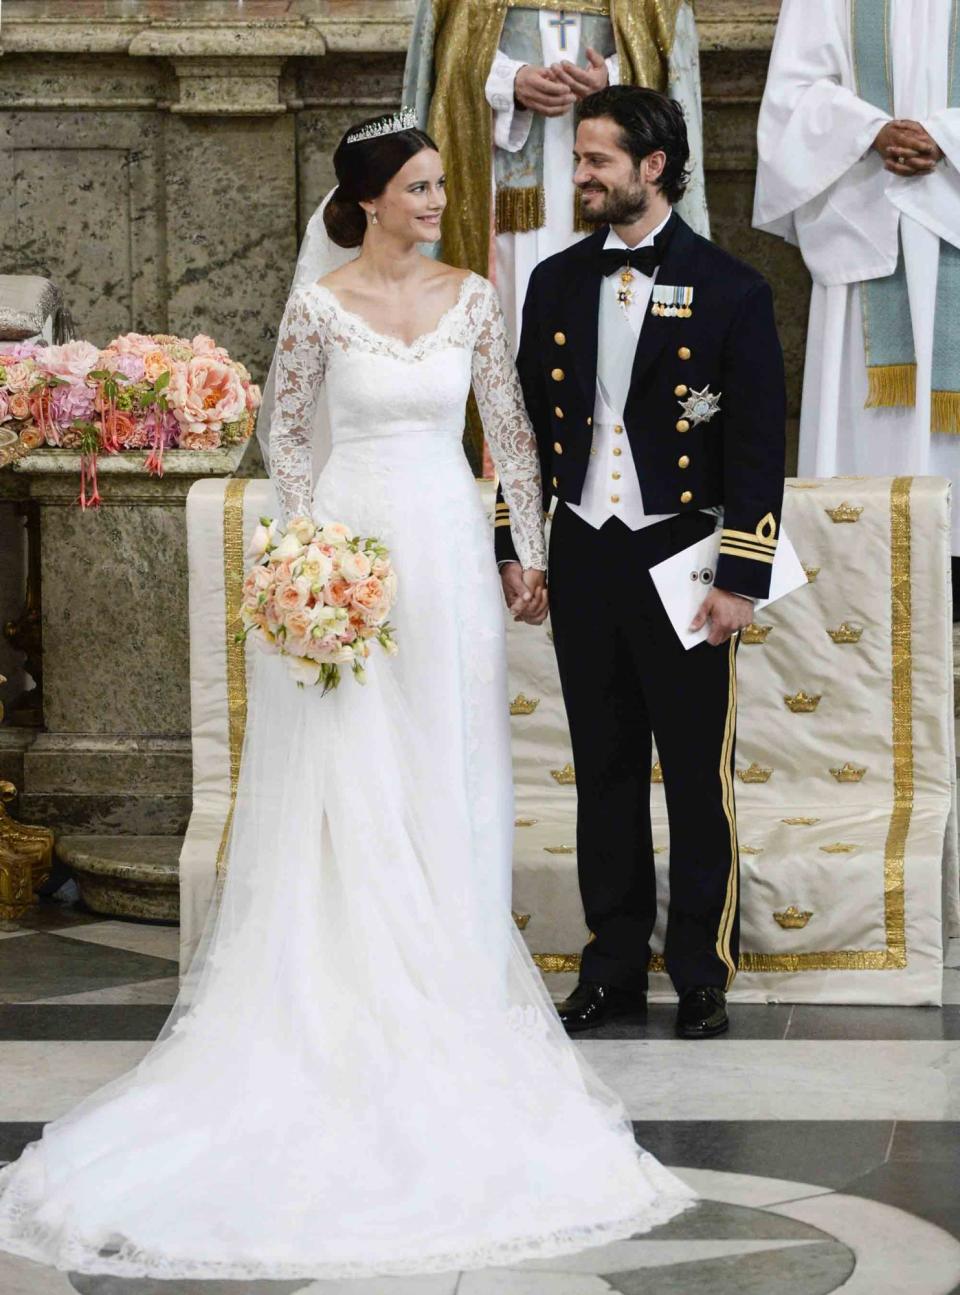 Prince Carl Philip and Sofia Hellqvist of Sweden